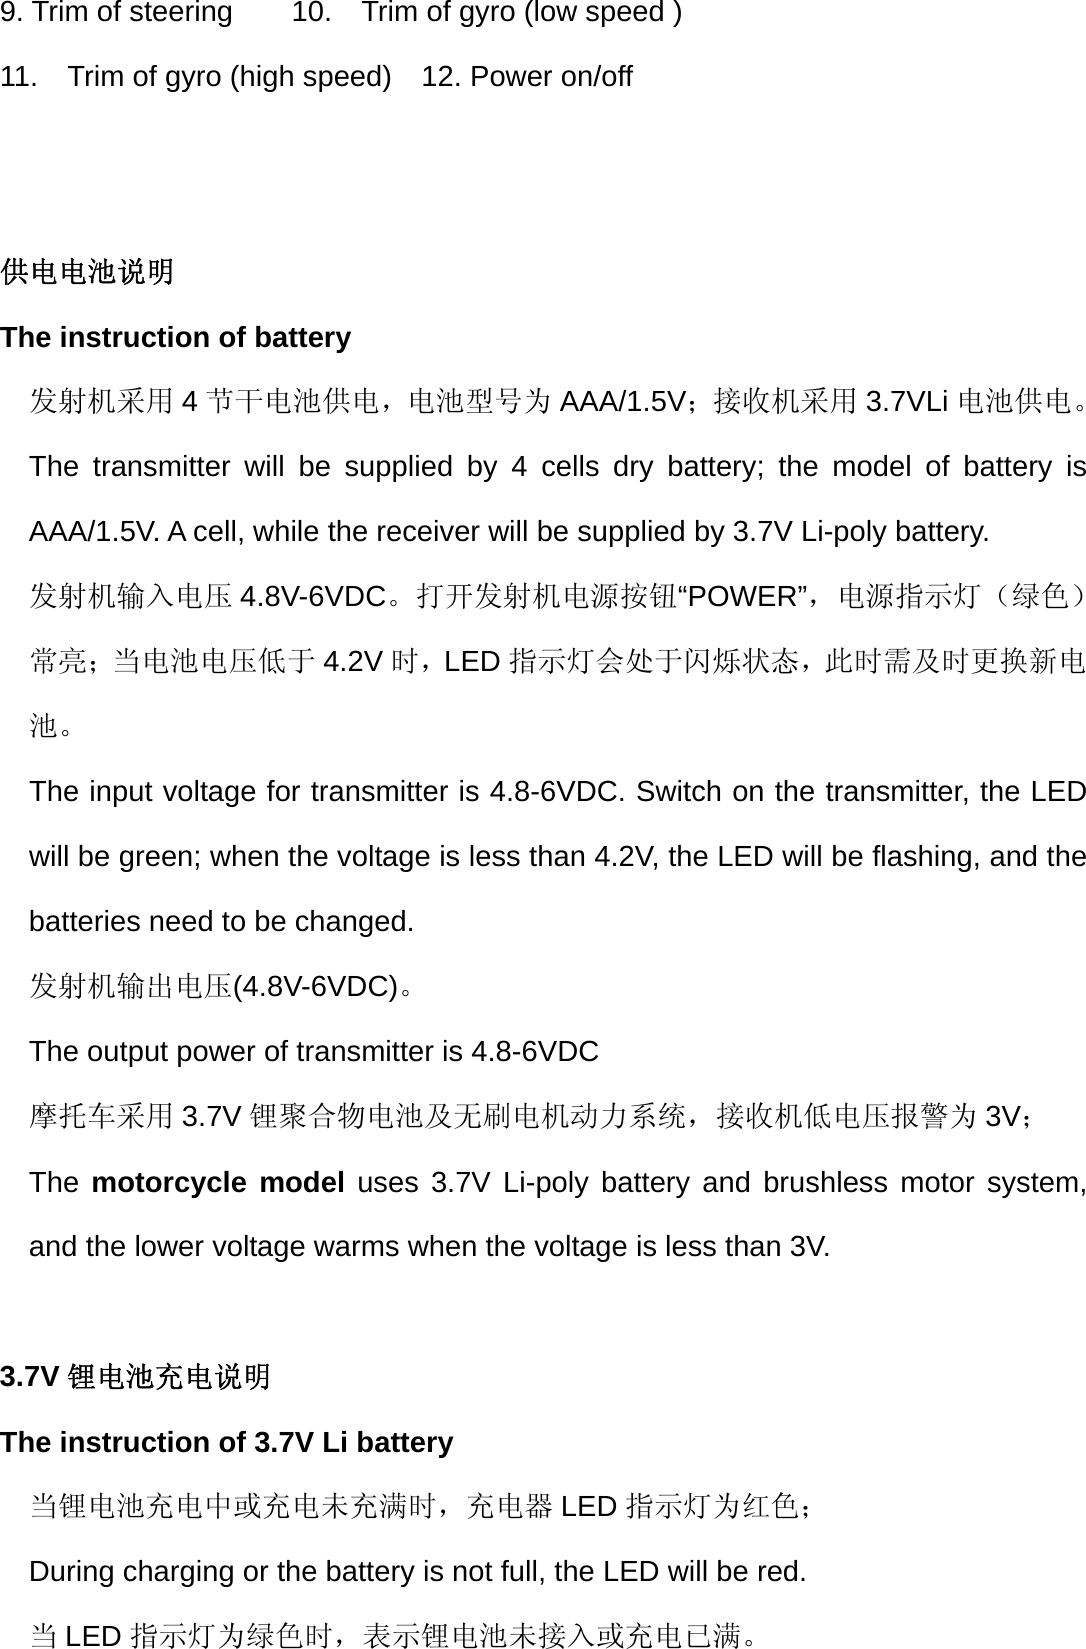 9. Trim of steering        10.    Trim of gyro (low speed )     11.    Trim of gyro (high speed)    12. Power on/off   供电电池说明  The instruction of battery 发射机采用 4节干电池供电，电池型号为 AAA/1.5V；接收机采用 3.7VLi 电池供电。 The transmitter will be supplied by 4 cells dry battery; the model of battery is AAA/1.5V. A cell, while the receiver will be supplied by 3.7V Li-poly battery. 发射机输入电压 4.8V-6VDC。打开发射机电源按钮“POWER”，电源指示灯（绿色）常亮；当电池电压低于 4.2V 时，LED 指示灯会处于闪烁状态，此时需及时更换新电池。 The input voltage for transmitter is 4.8-6VDC. Switch on the transmitter, the LED will be green; when the voltage is less than 4.2V, the LED will be flashing, and the batteries need to be changed. 发射机输出电压(4.8V-6VDC)。 The output power of transmitter is 4.8-6VDC 摩托车采用 3.7V 锂聚合物电池及无刷电机动力系统，接收机低电压报警为 3V； The motorcycle model uses 3.7V Li-poly battery and brushless motor system, and the lower voltage warms when the voltage is less than 3V.  3.7V 锂电池充电说明  The instruction of 3.7V Li battery 当锂电池充电中或充电未充满时，充电器 LED 指示灯为红色； During charging or the battery is not full, the LED will be red. 当LED 指示灯为绿色时，表示锂电池未接入或充电已满。 